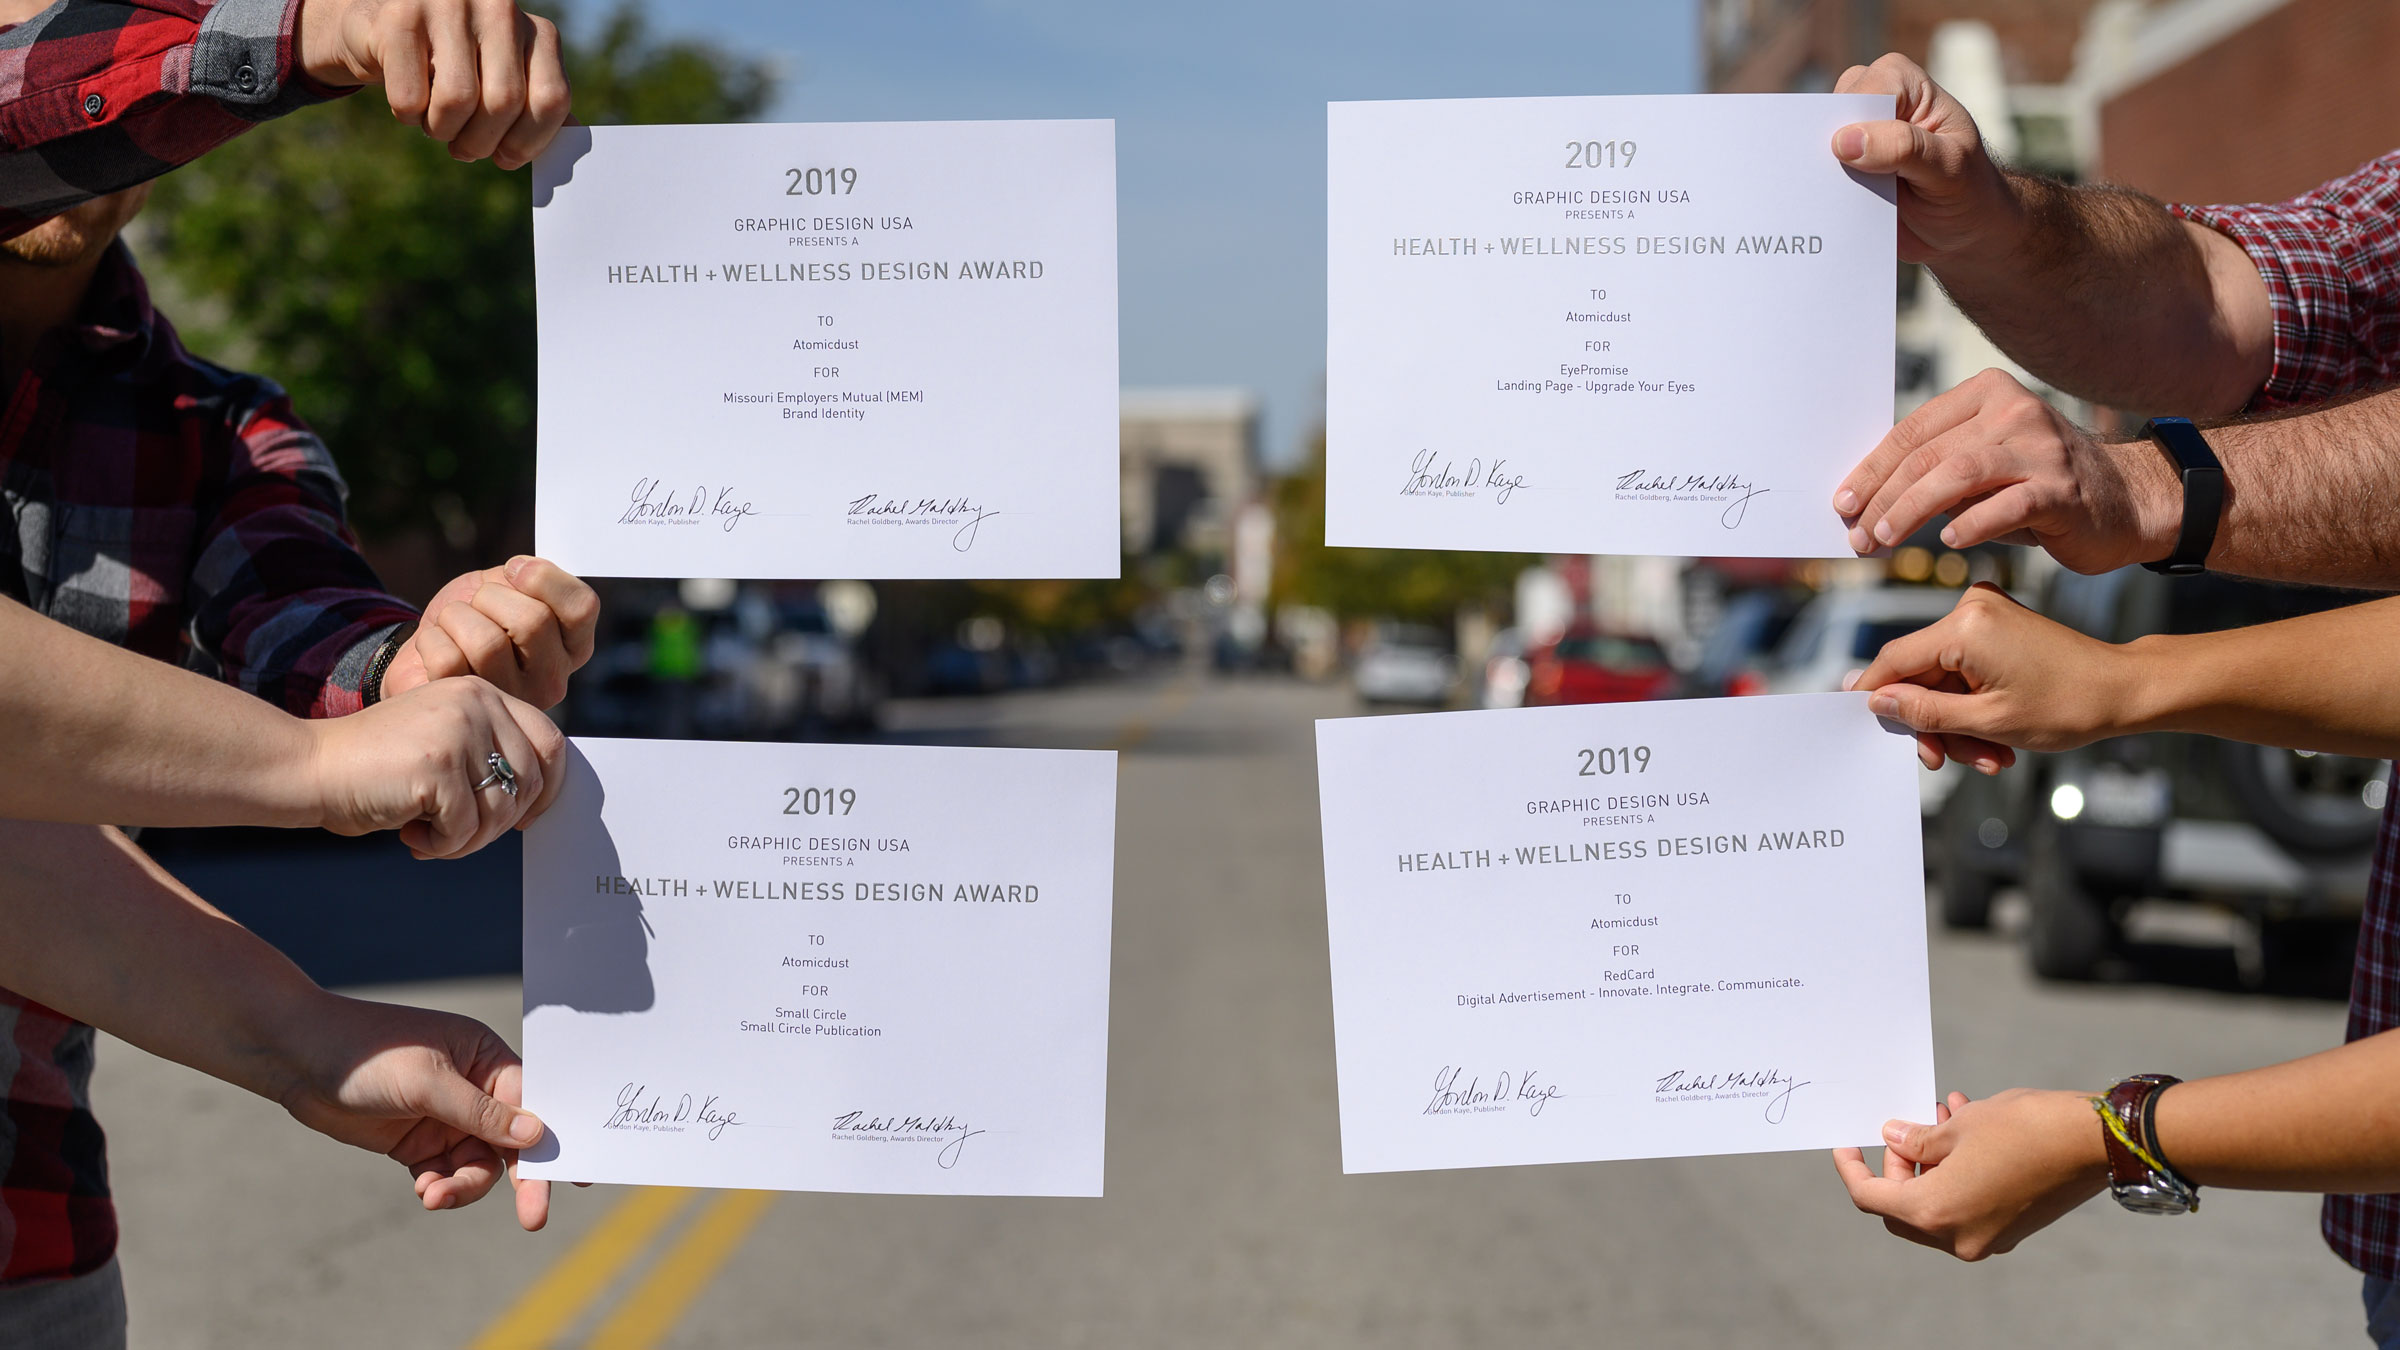 Atomicdust team members holding GDUSA Health + Wellness Design Awards certificates